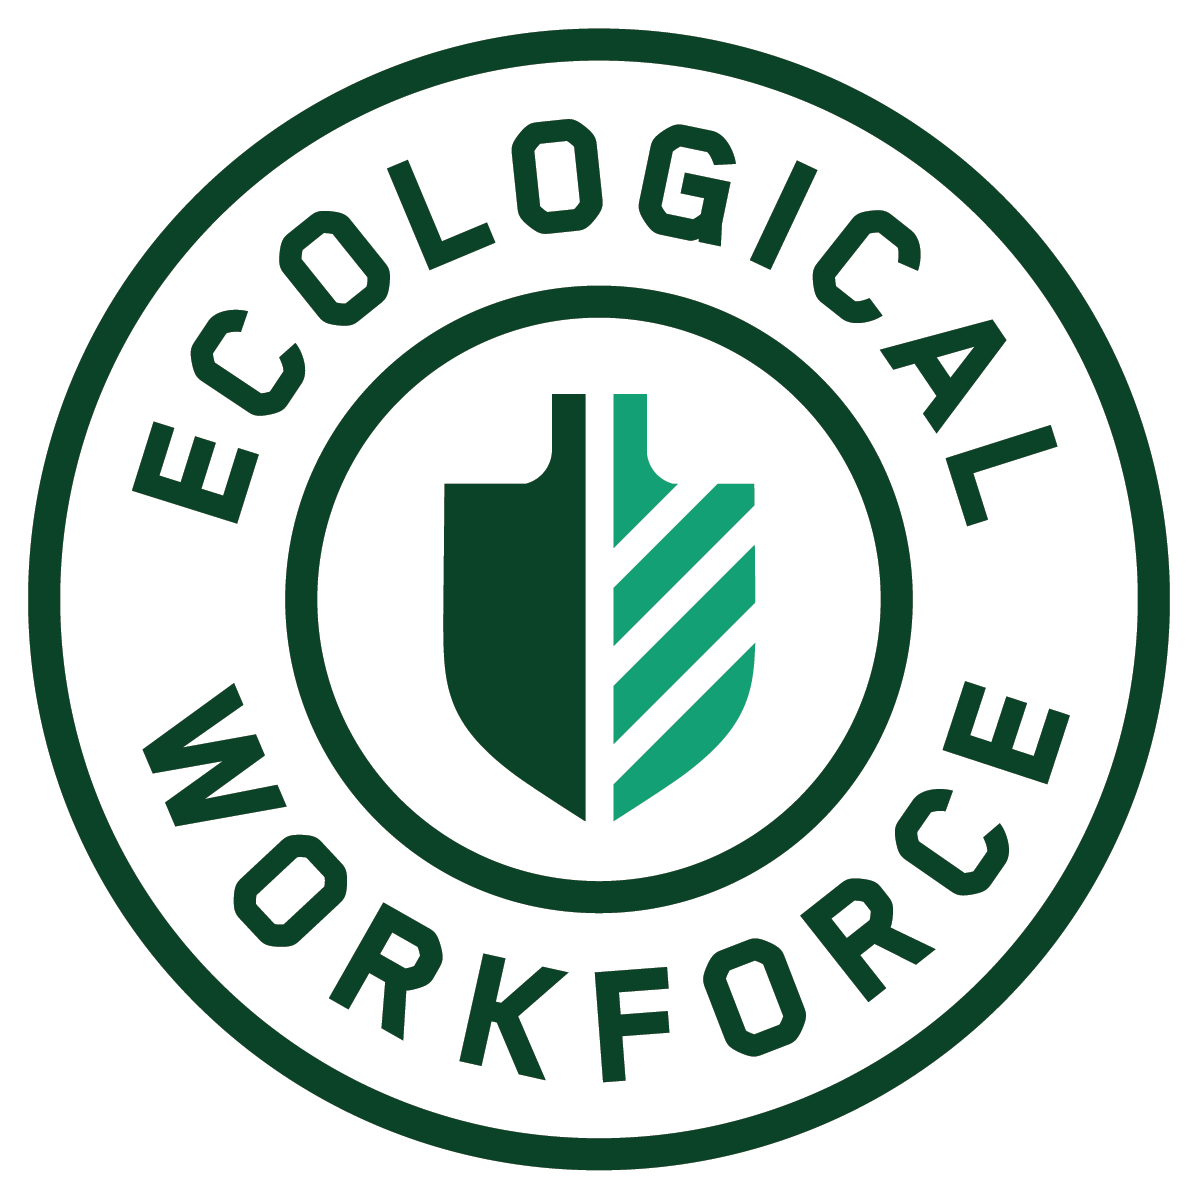 Ecological Workforce